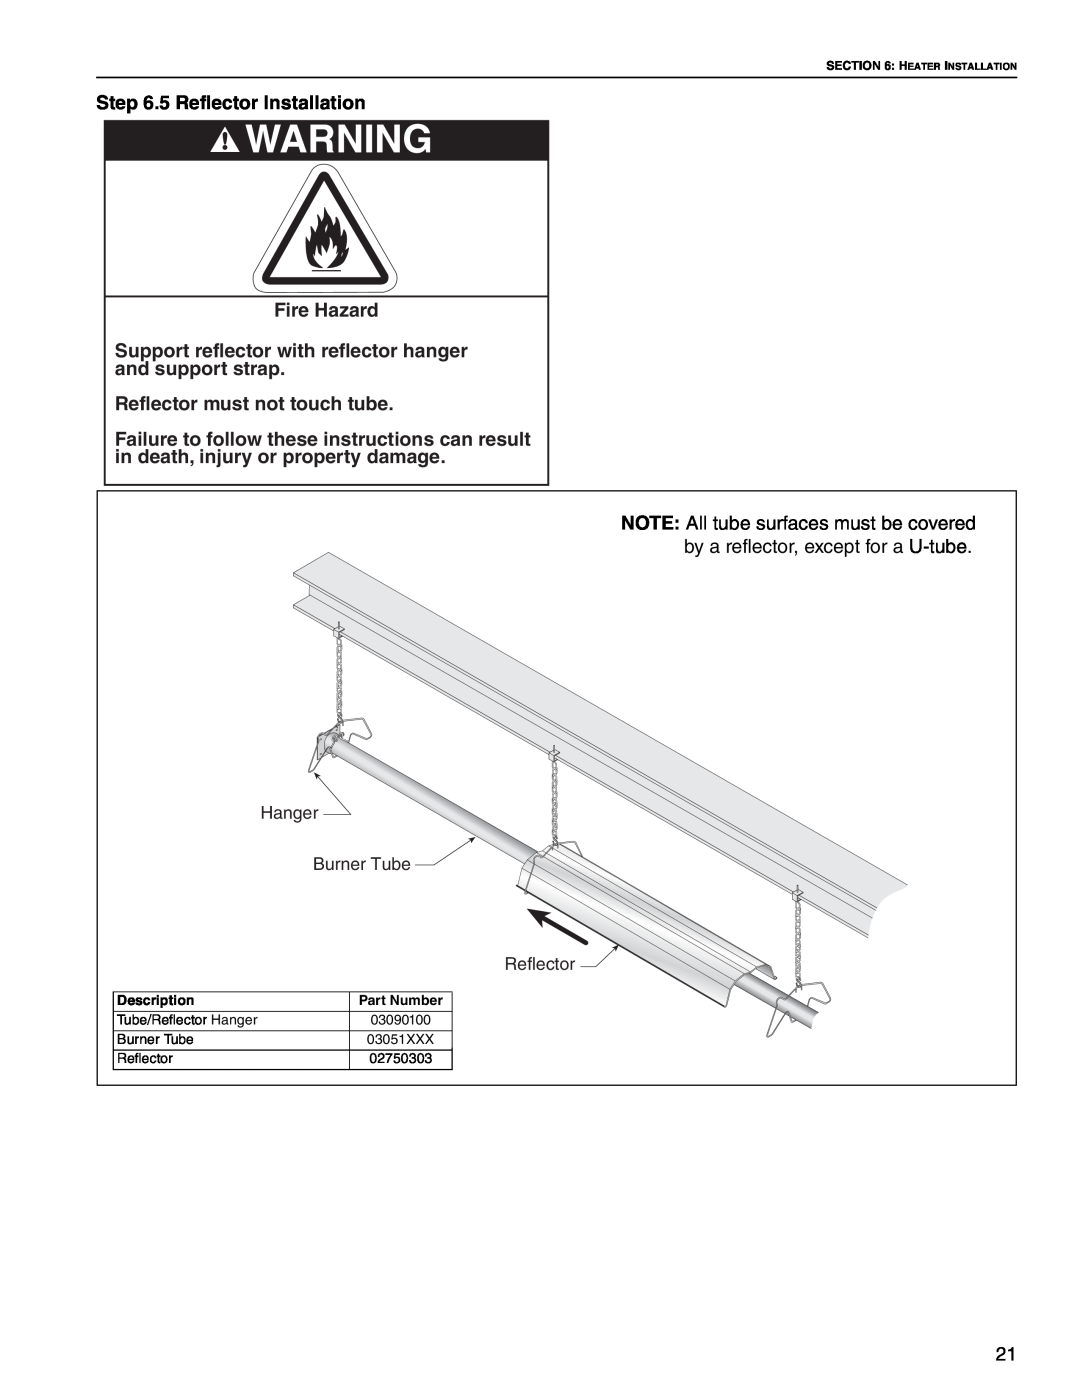 Roberts Gorden Linear Heater manual 5 Reflector Installation, Fire Hazard, Reflector must not touch tube 